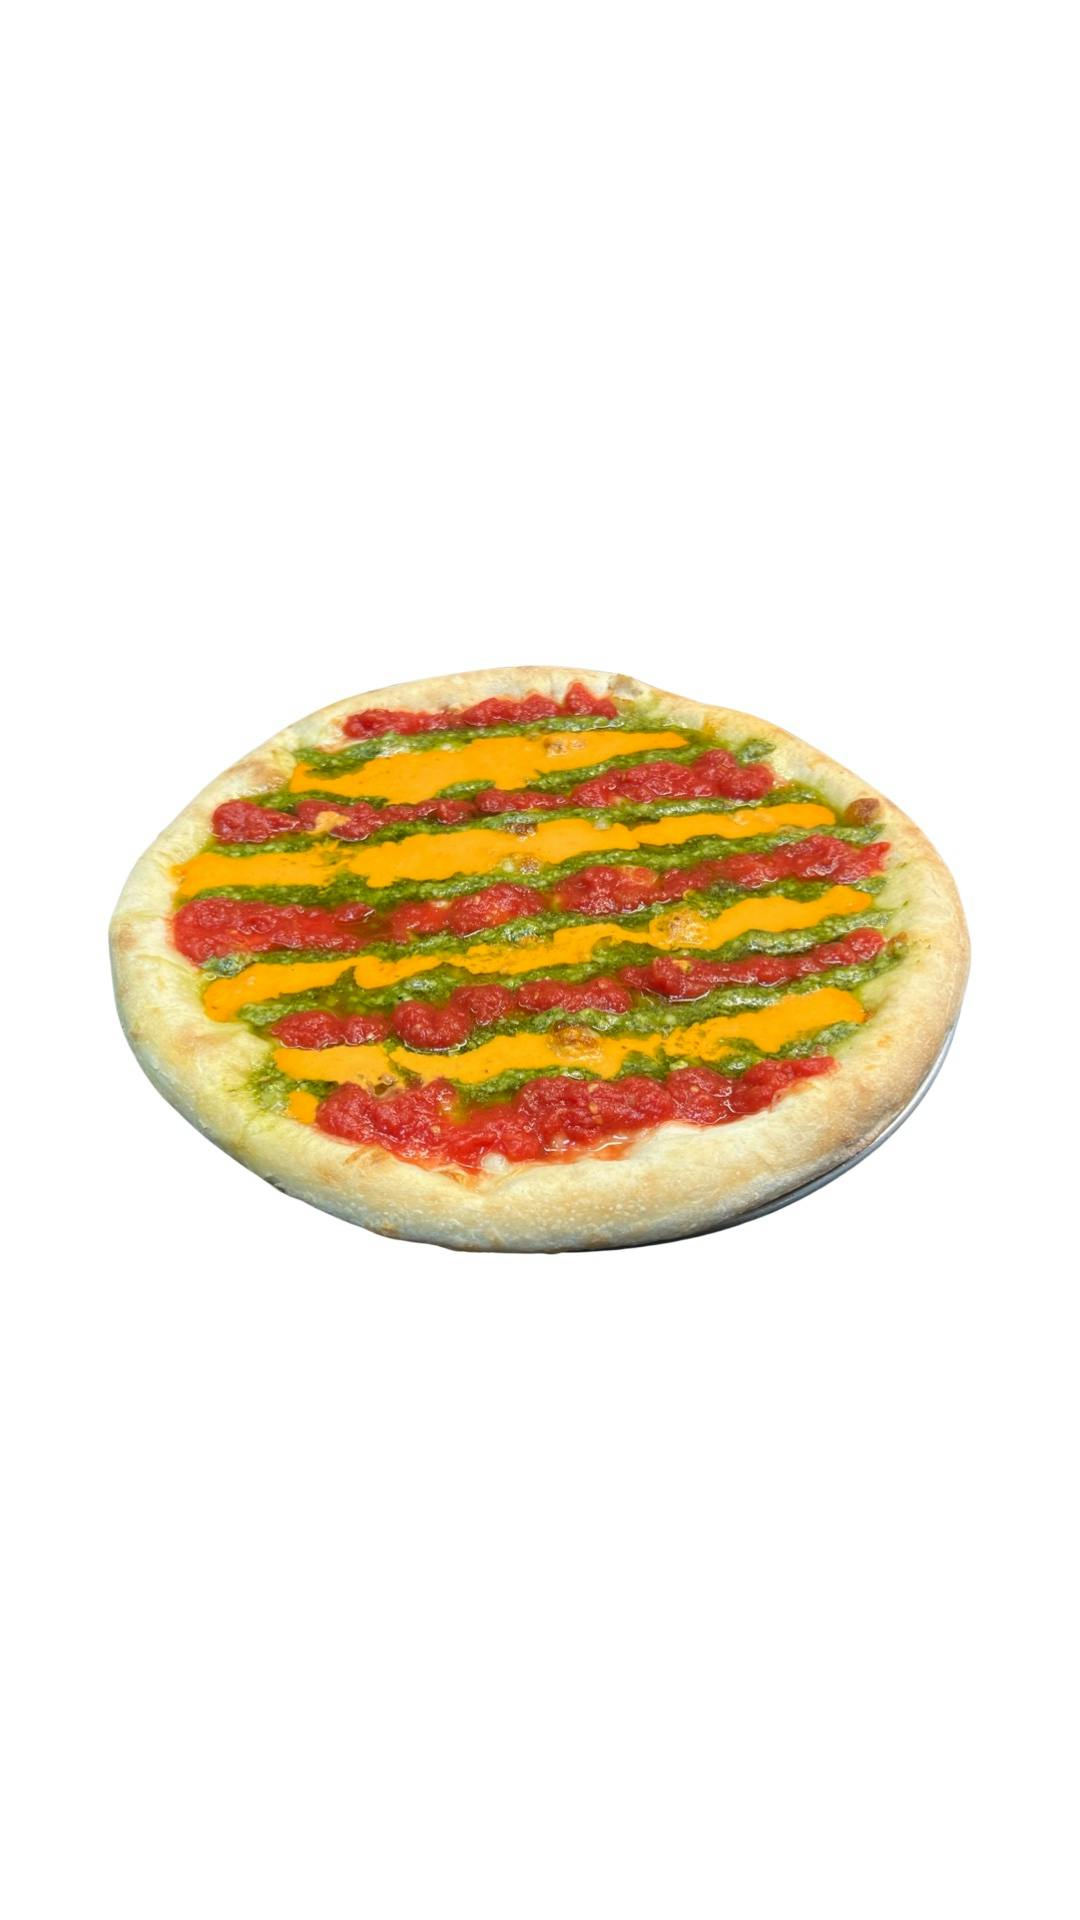 Tri-Color Pizza Personal from Mario's Pizzeria in Seaford, NY